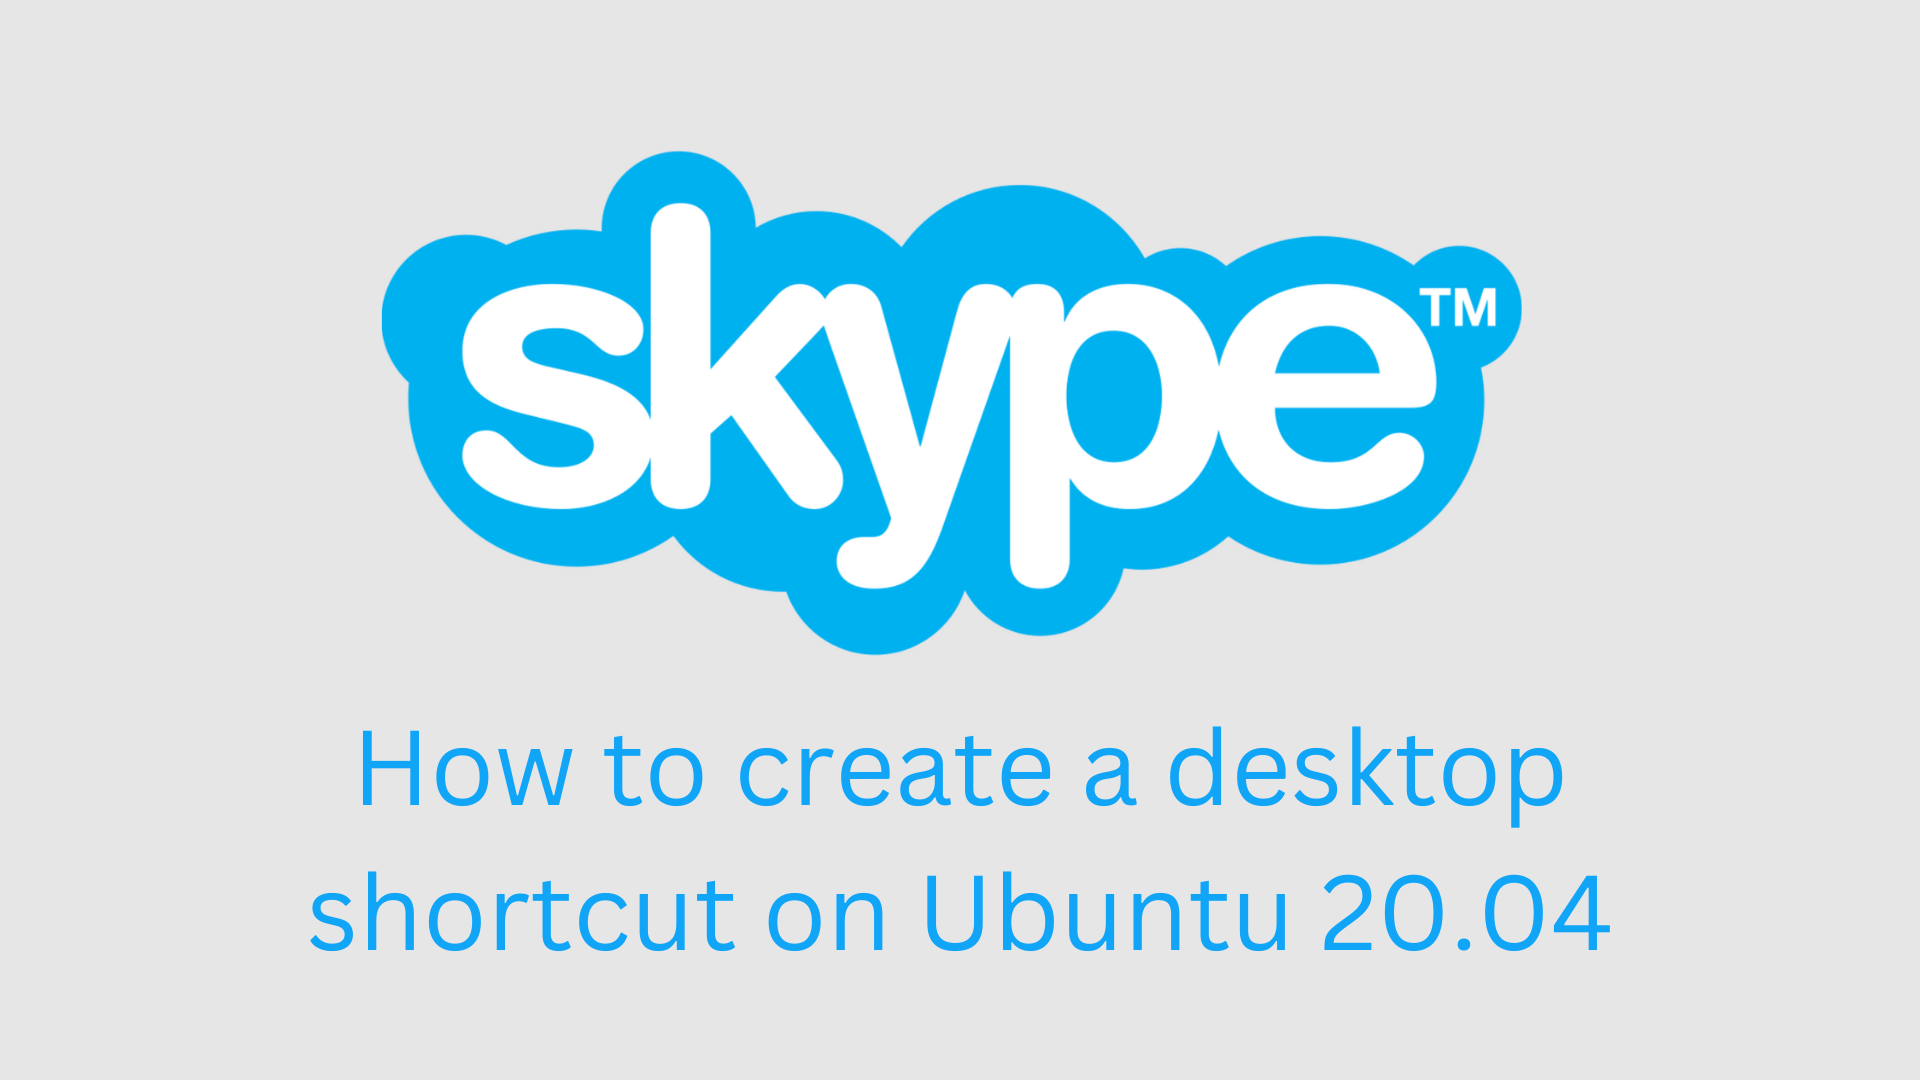 How to create a desktop shortcut on Ubuntu 20.04